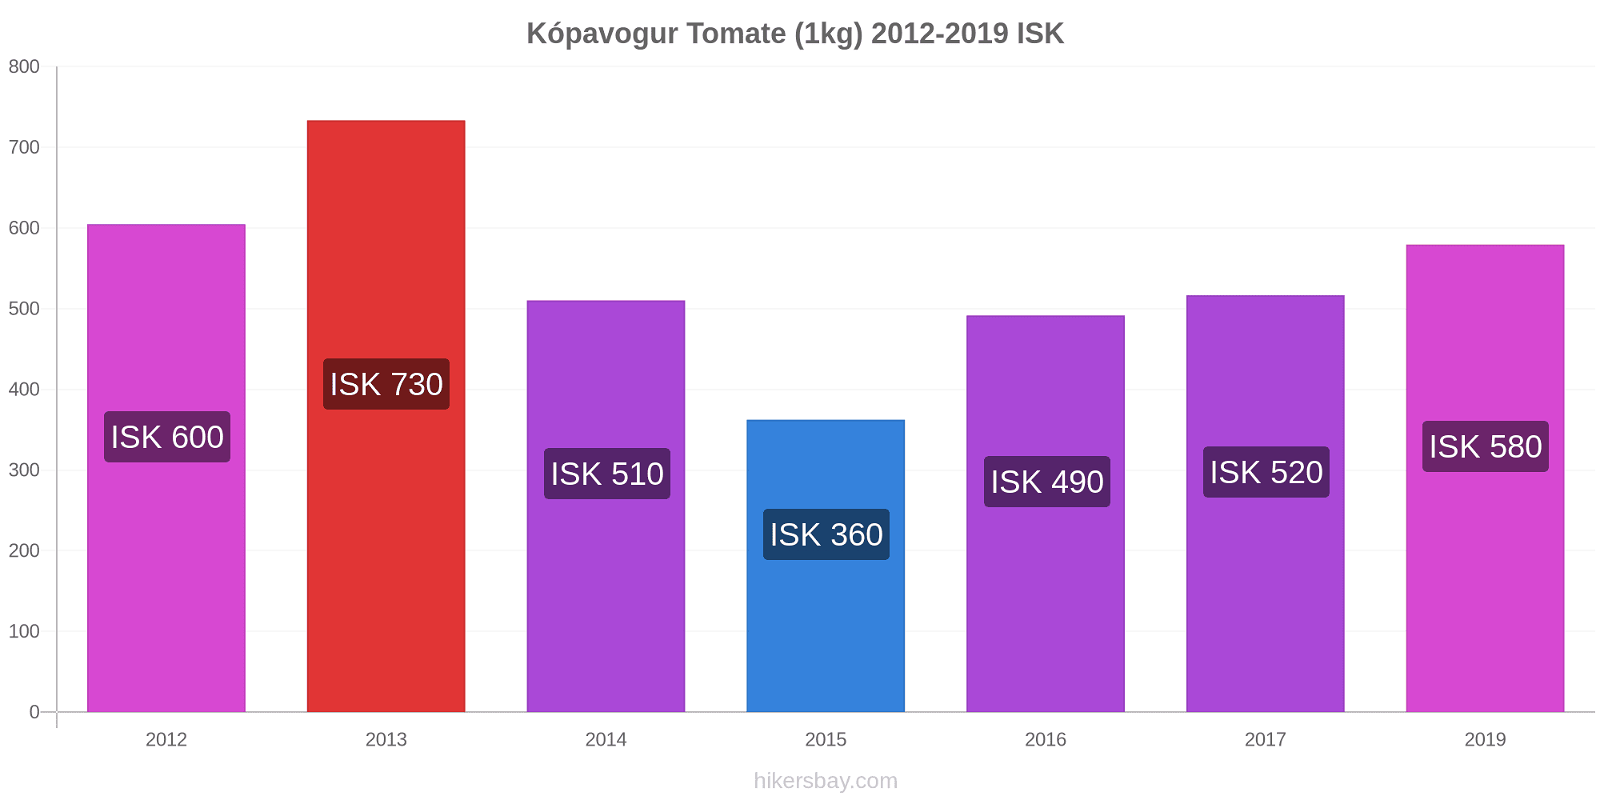 Kópavogur changements de prix Tomate (1kg) hikersbay.com